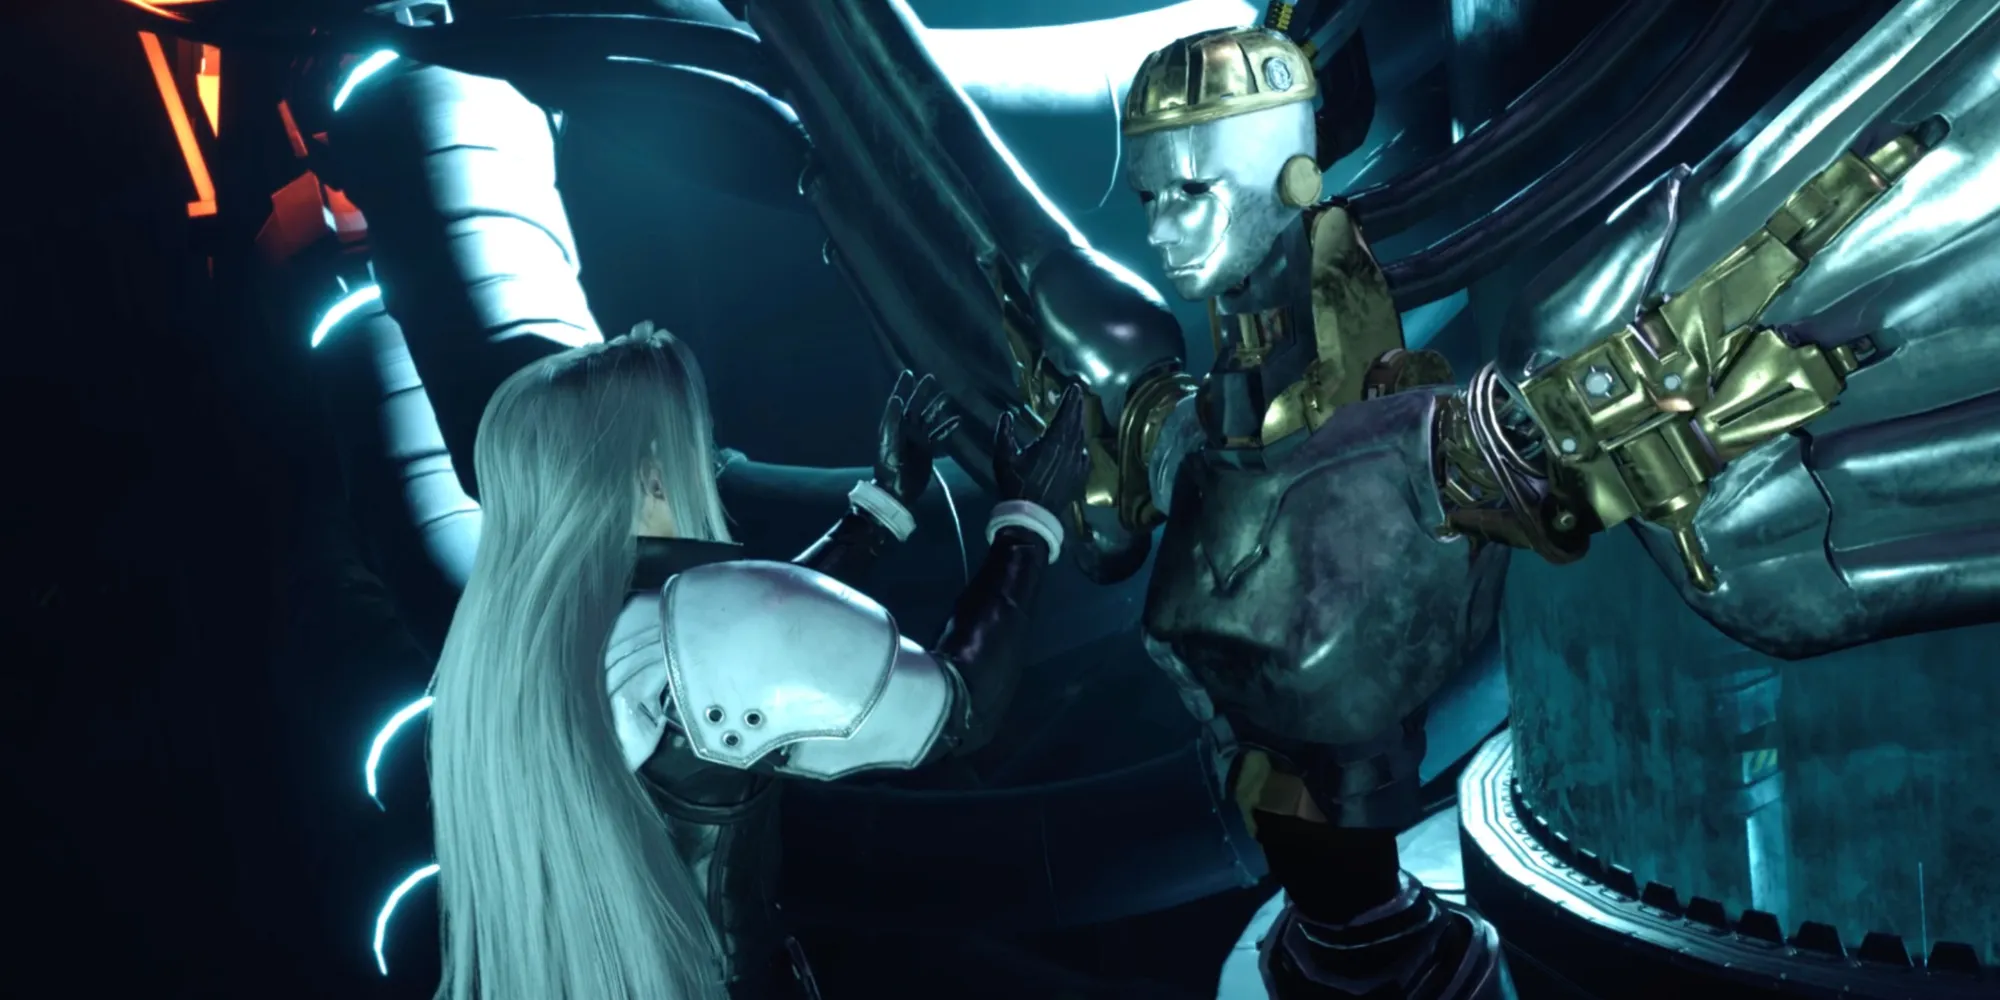 Sephiroth and Jenova in Final Fantasy 7 Rebirth